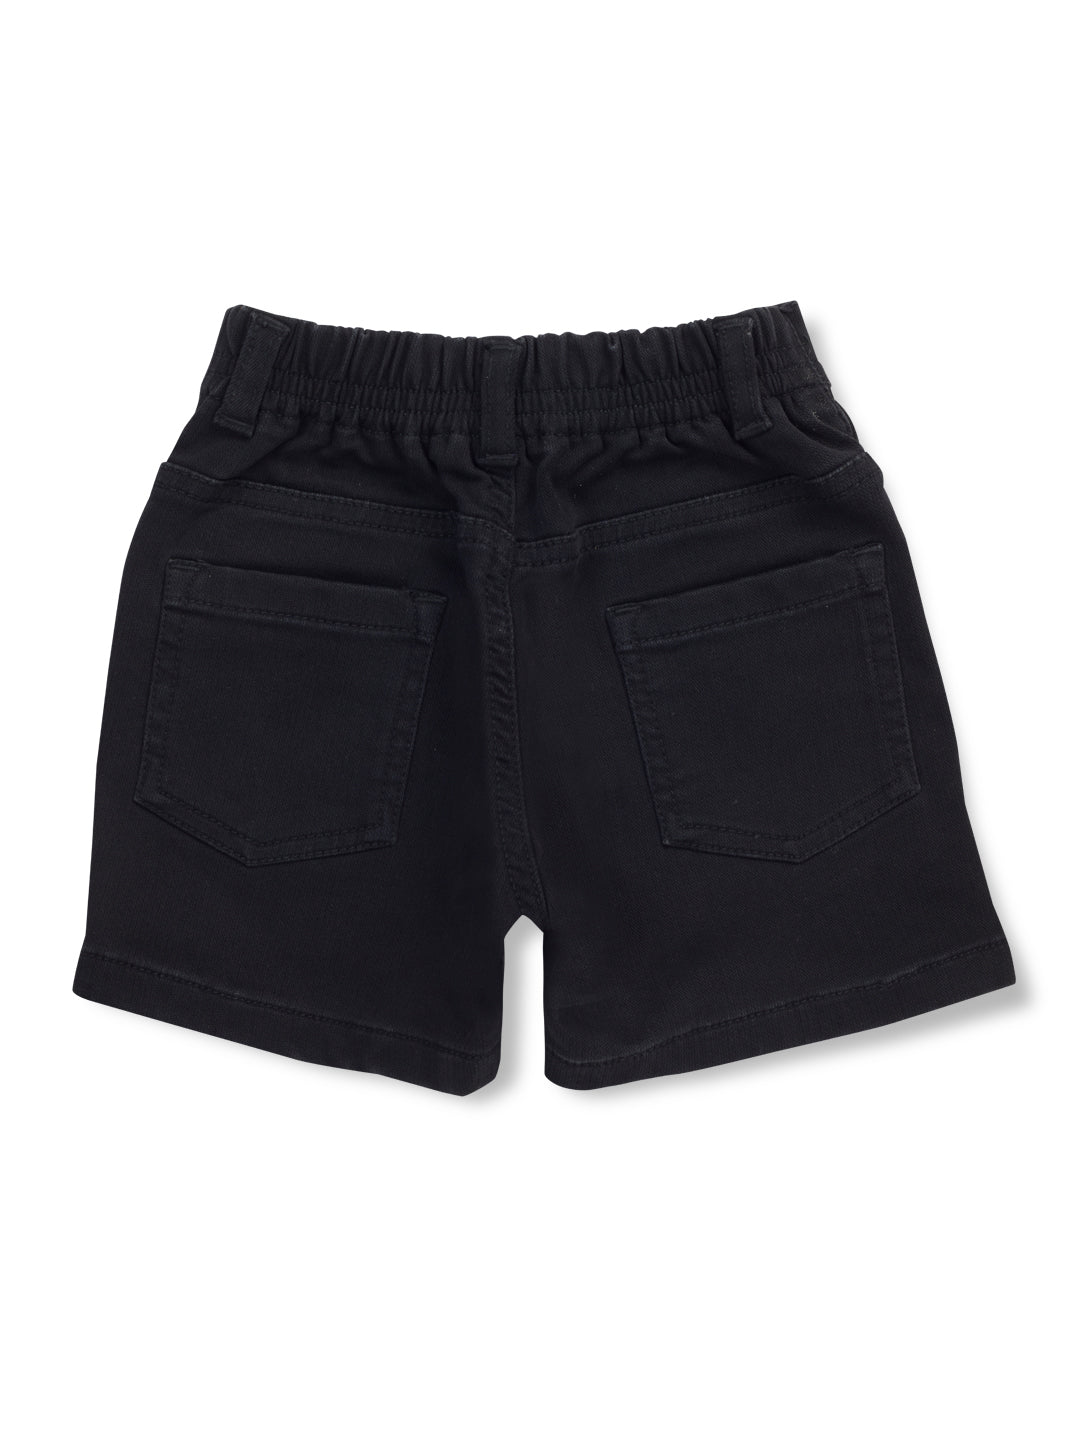 Boys Black Solid Denim Shorts